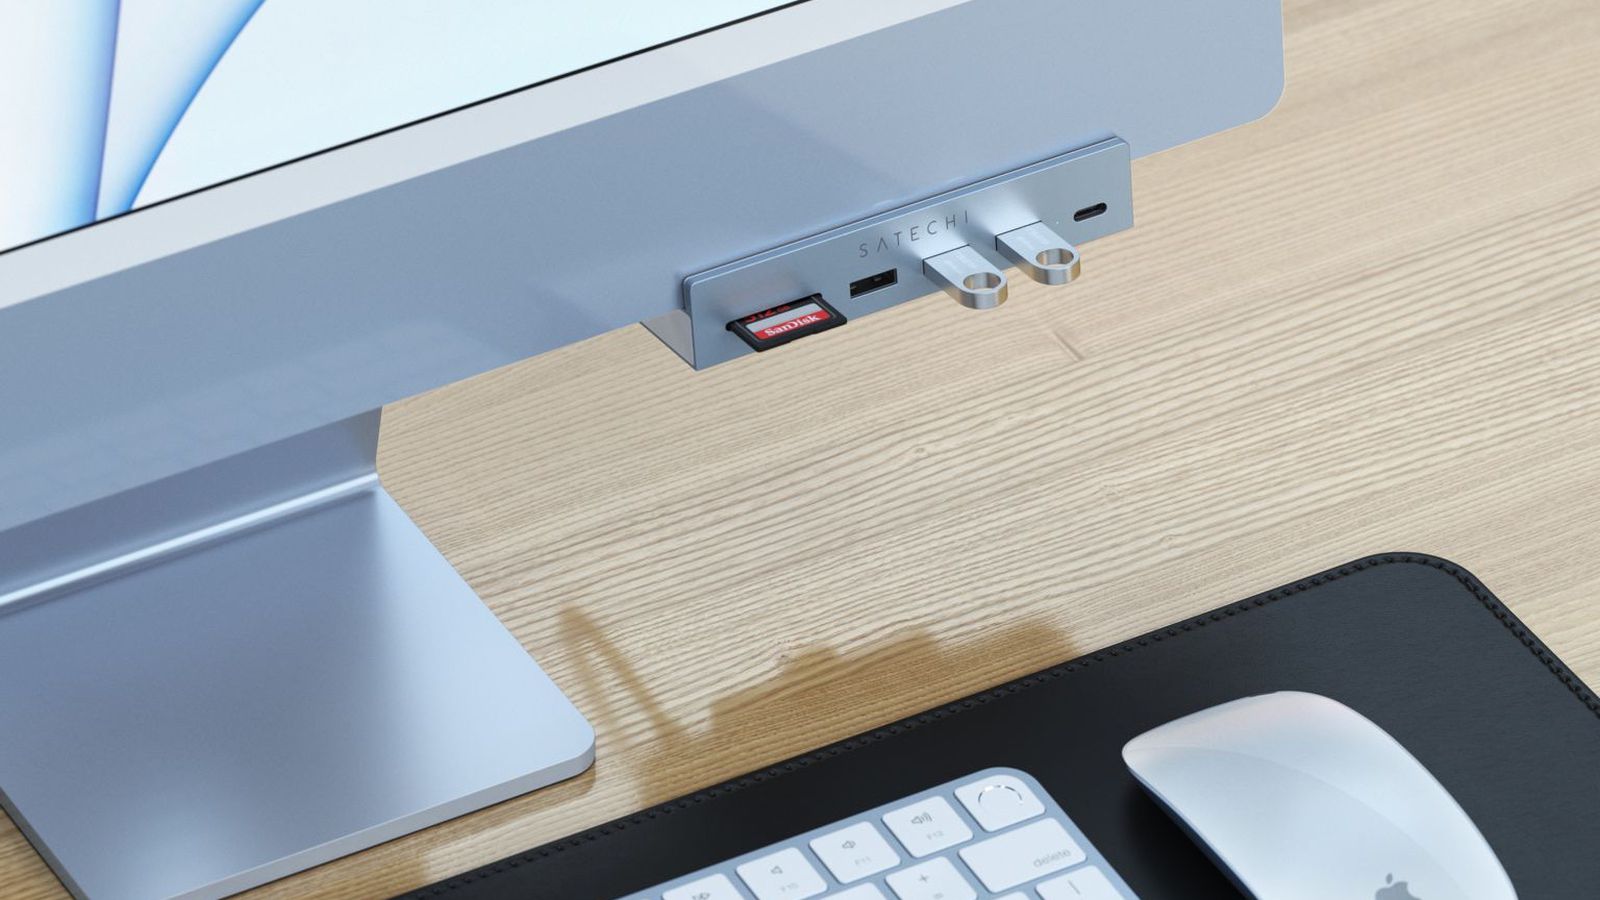 Satechi Launches New USB-C Clamp Hub for M1 iMac - MacRumors